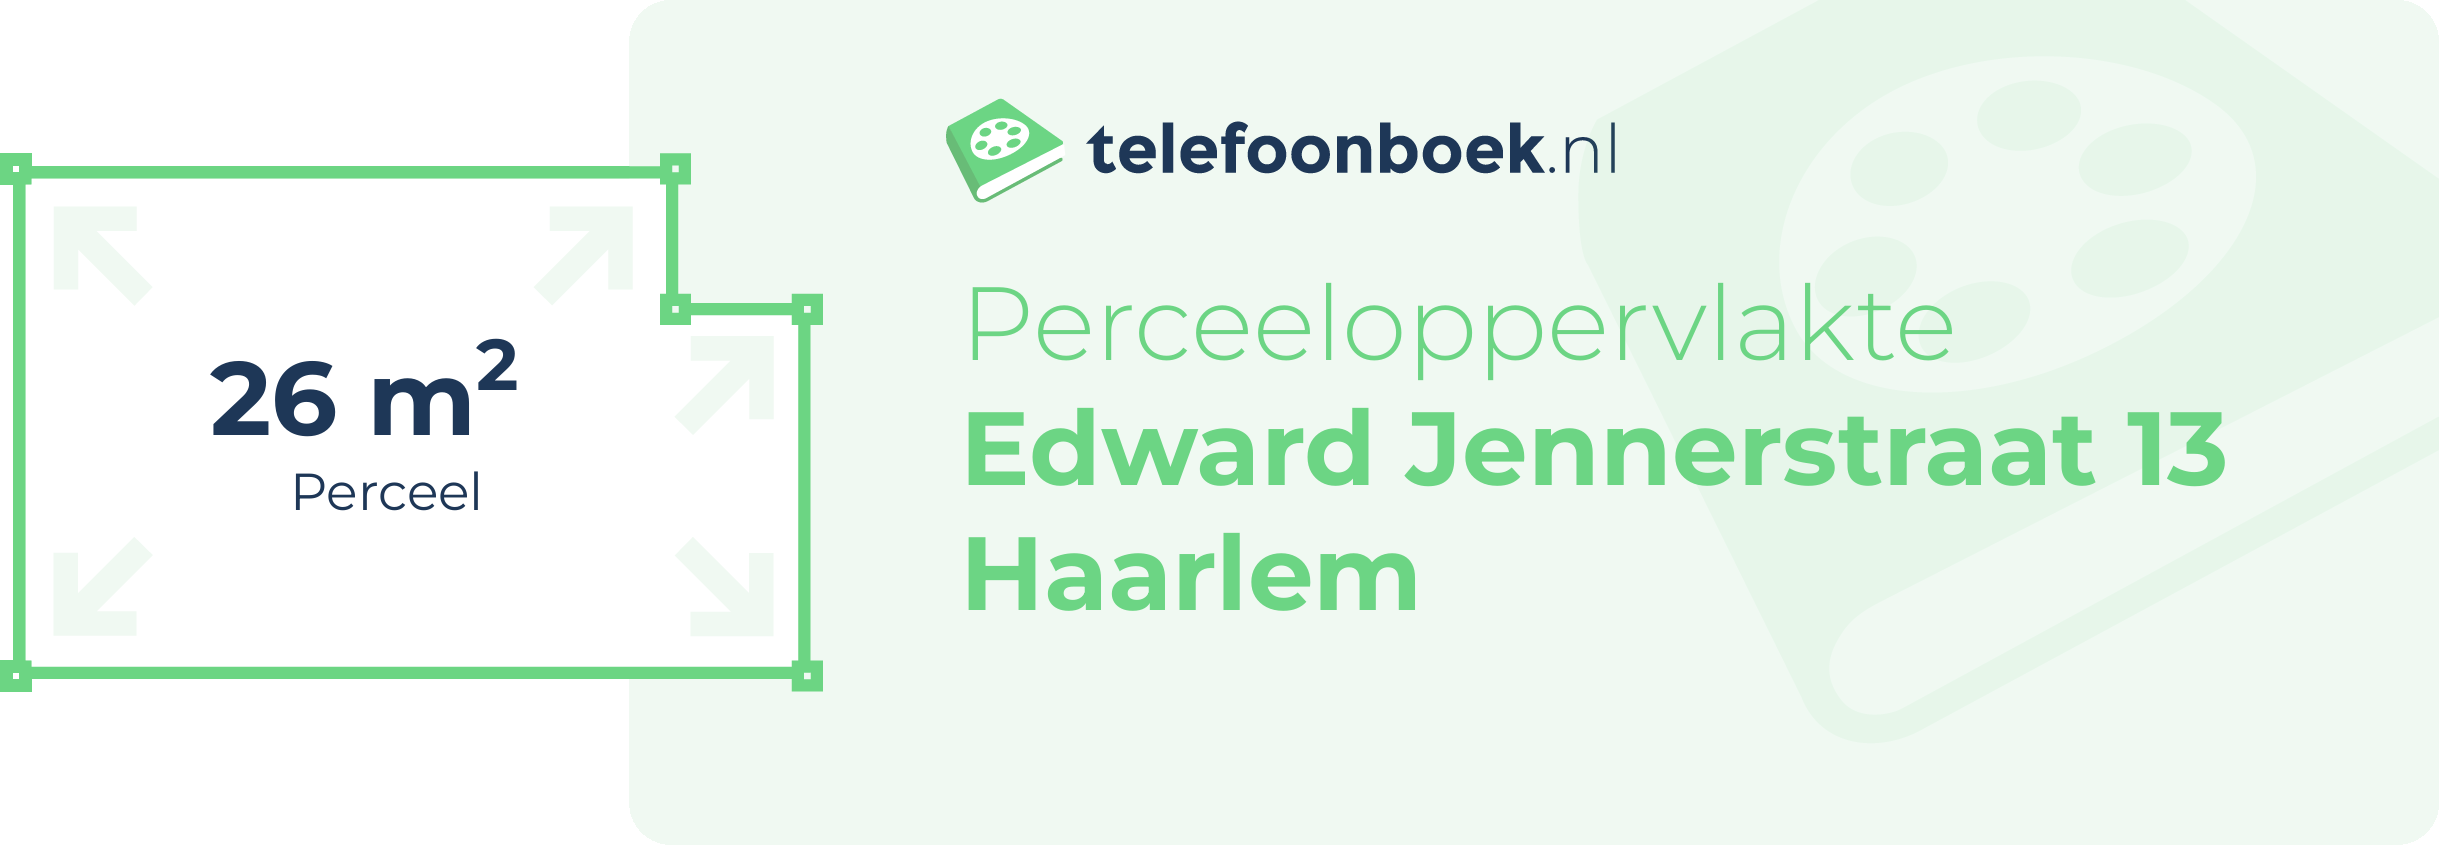 Perceeloppervlakte Edward Jennerstraat 13 Haarlem